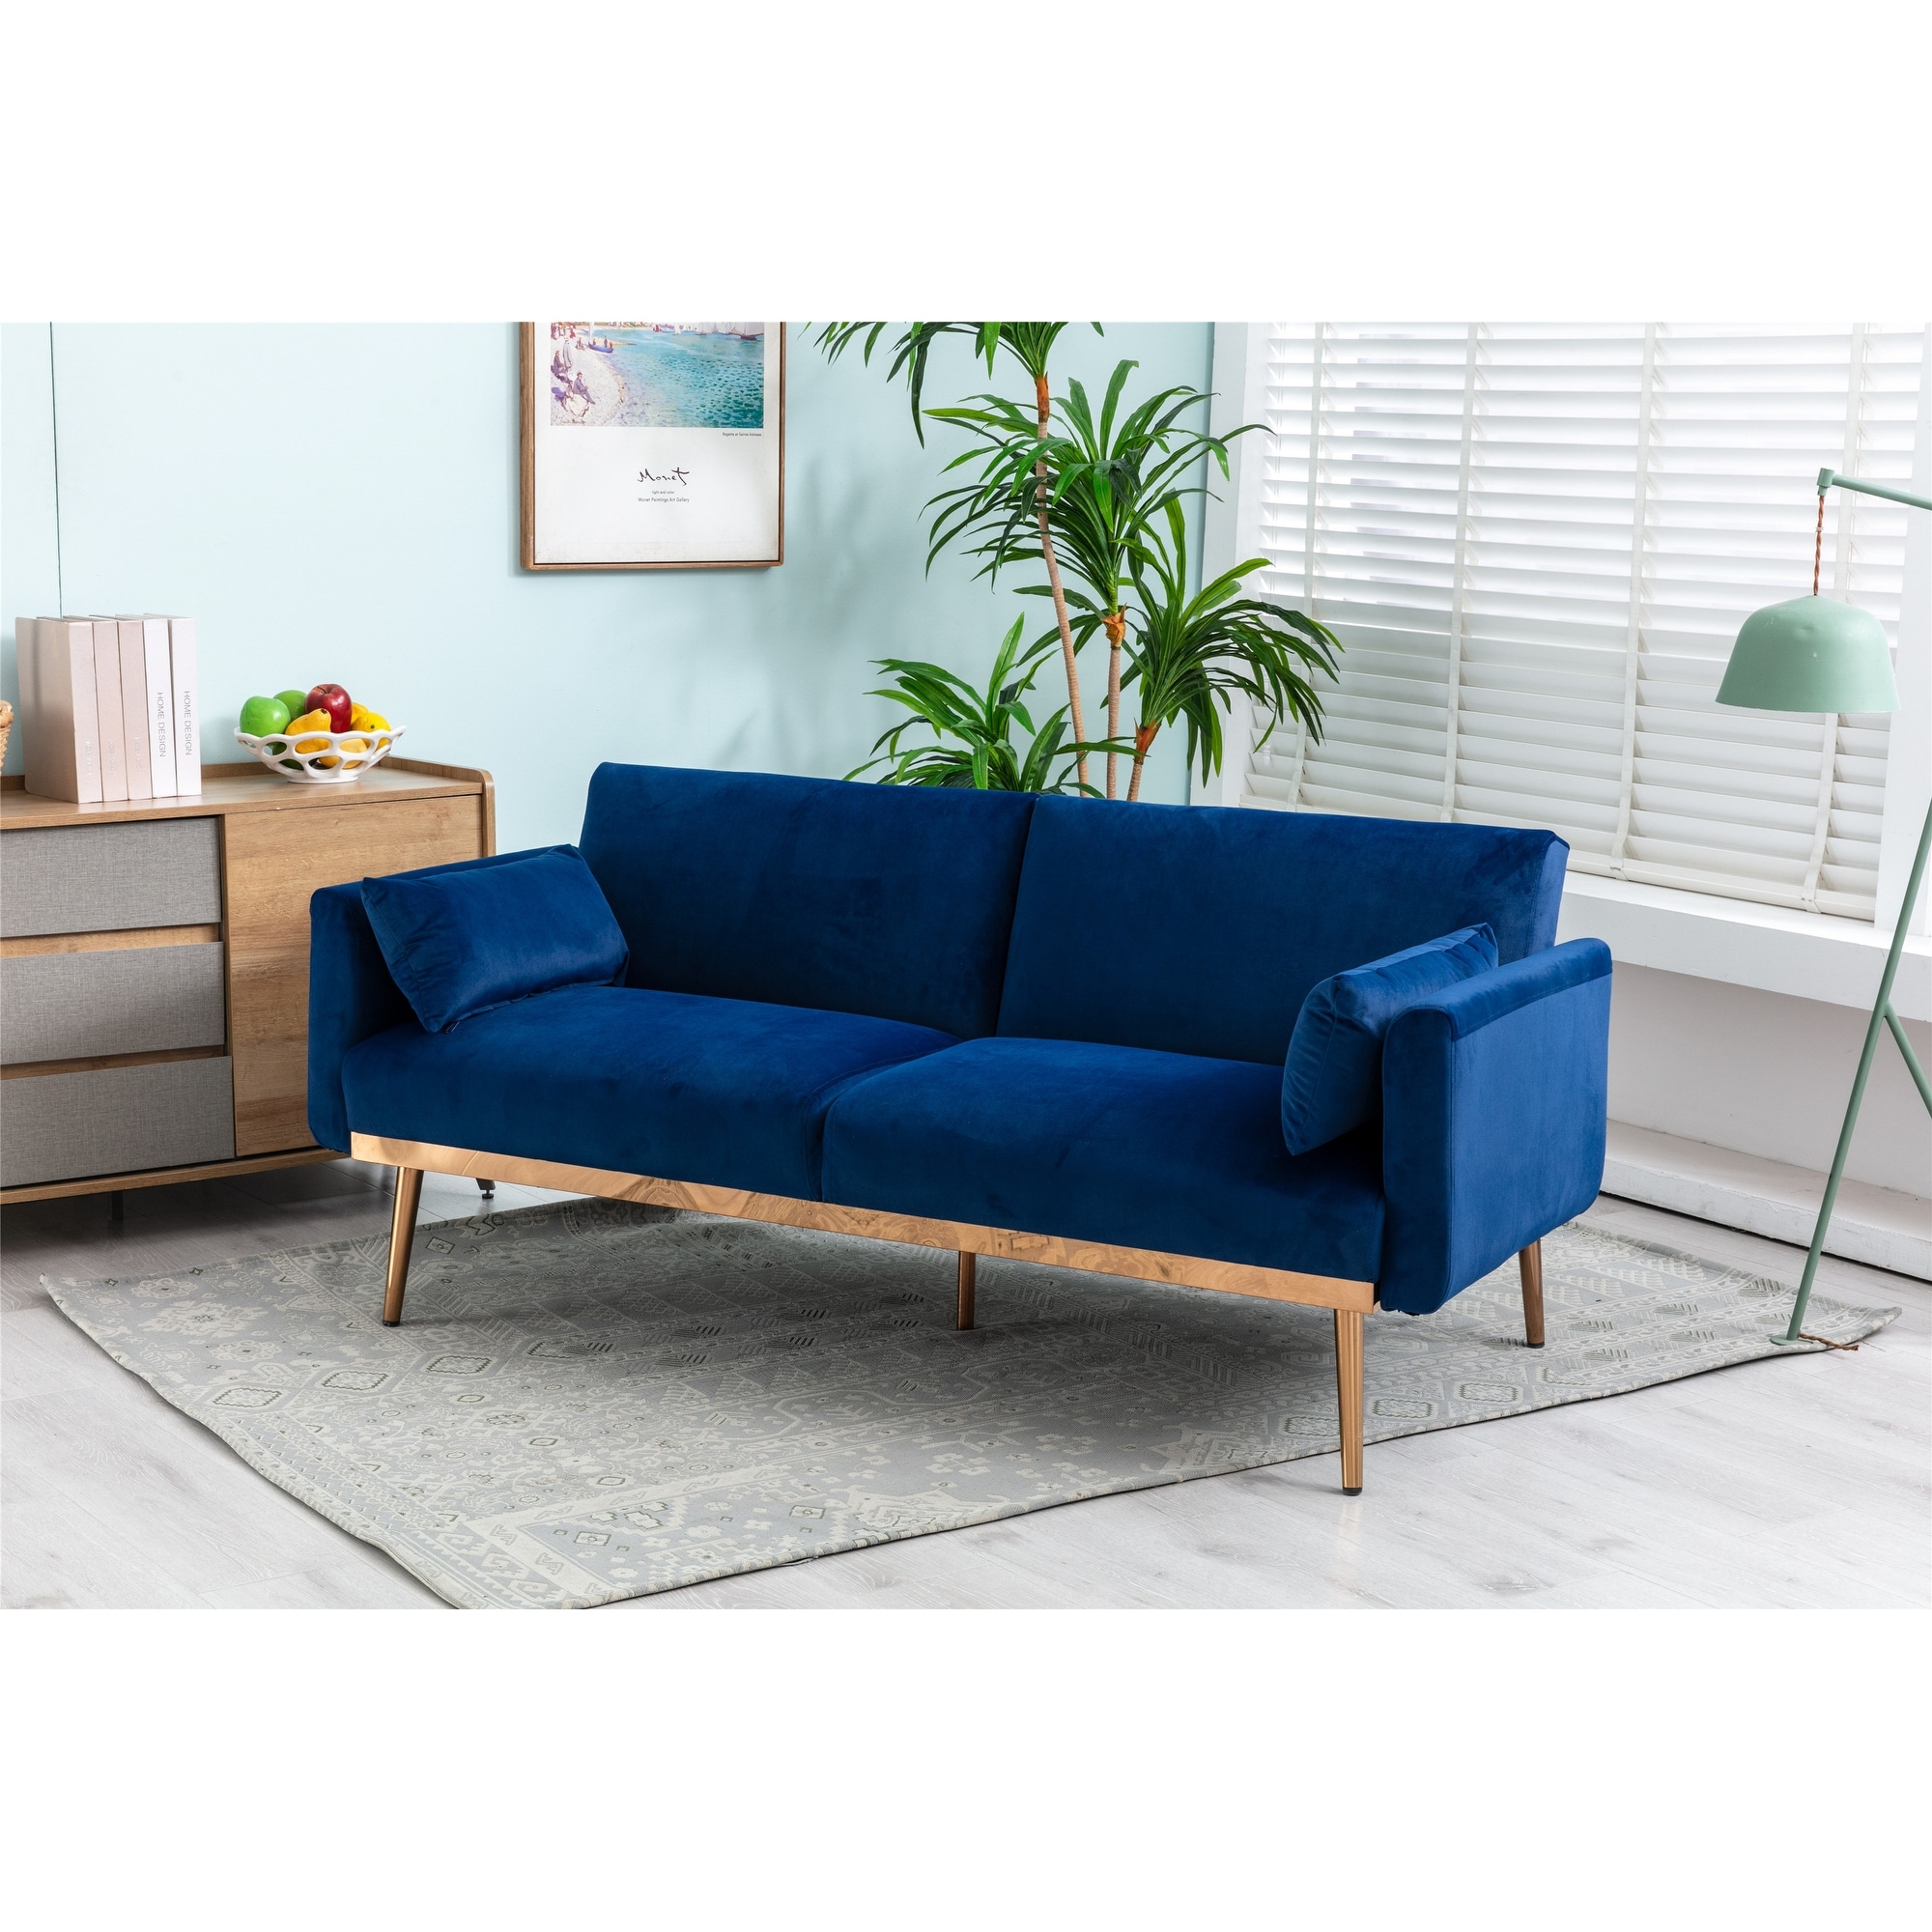 Modern Velvet Fabric Loveseat Sofa, 2 Seater Adjustable Backrest Sofa Couch with Metal Feet & Pillows, for Living Room, Bedroom